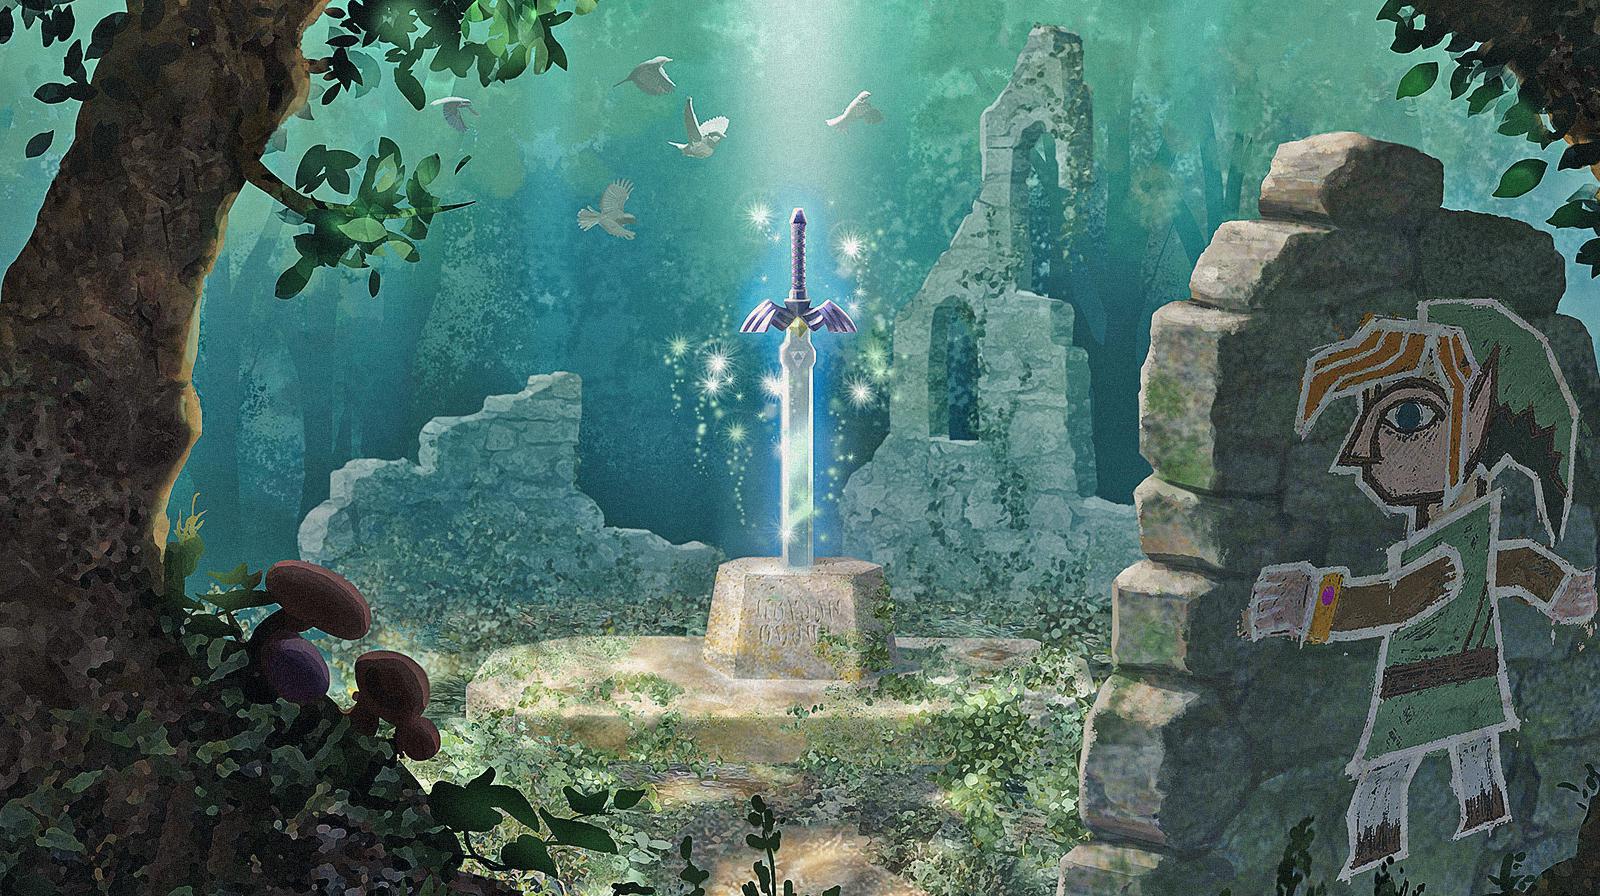 Le migliori versioni di Hyrule in The Legend of Zelda